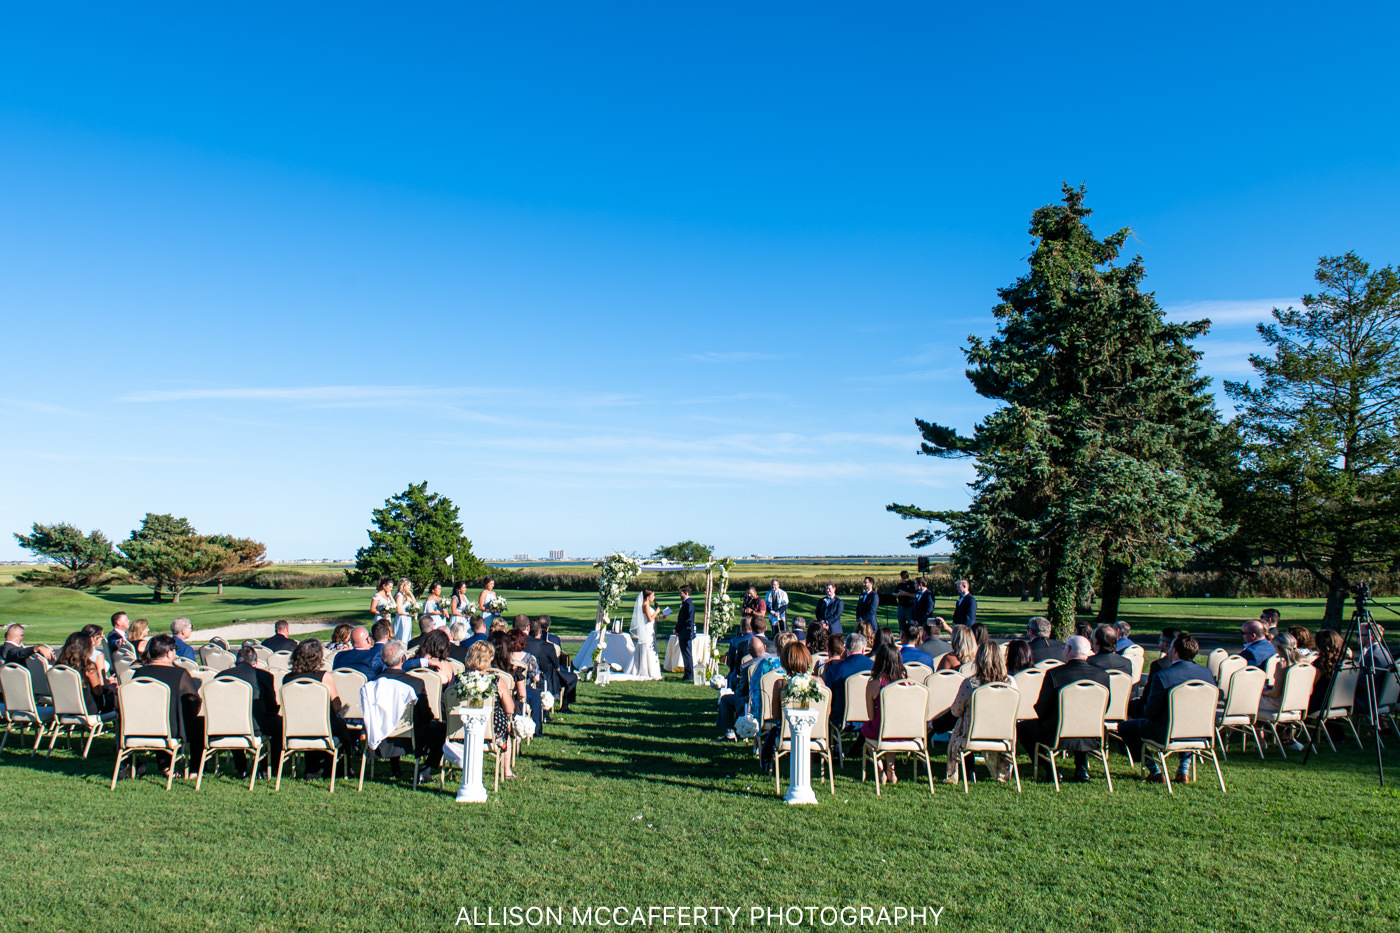 Linwood Country Club Outdoor Wedding Venue